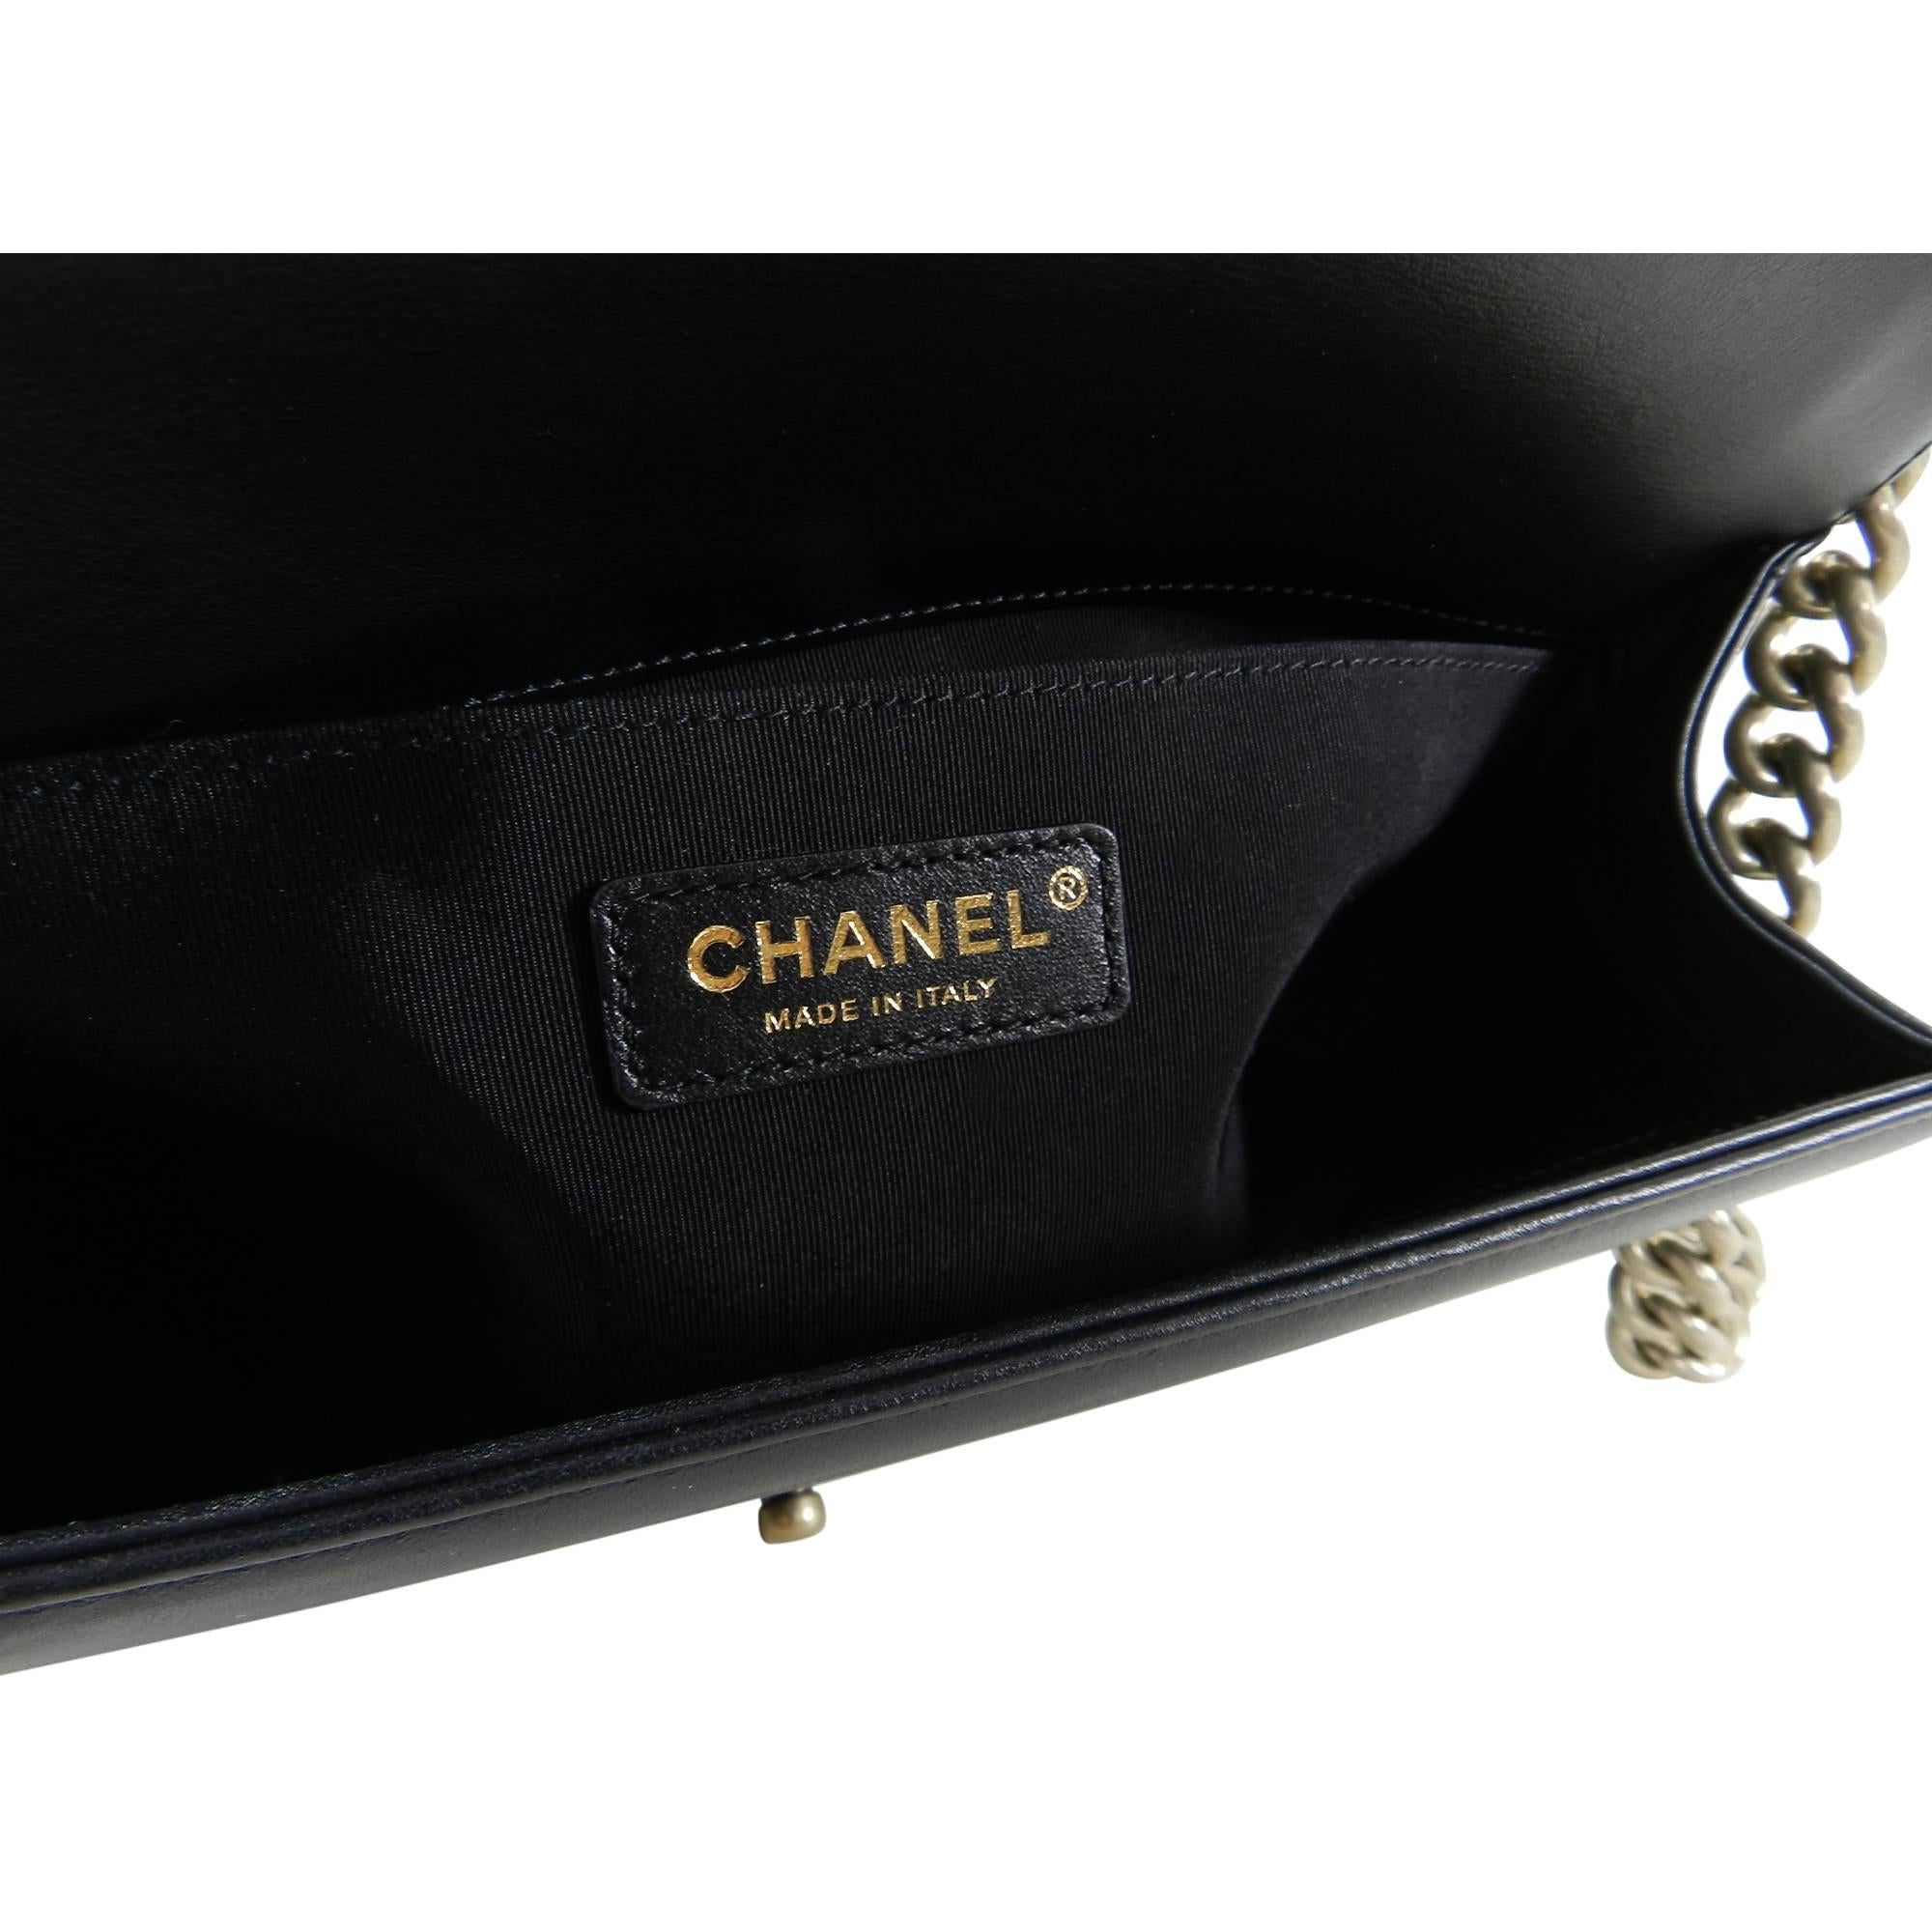 Chanel 16A Le Boy in Rome Medium Black and Gold Chevron Bag 4